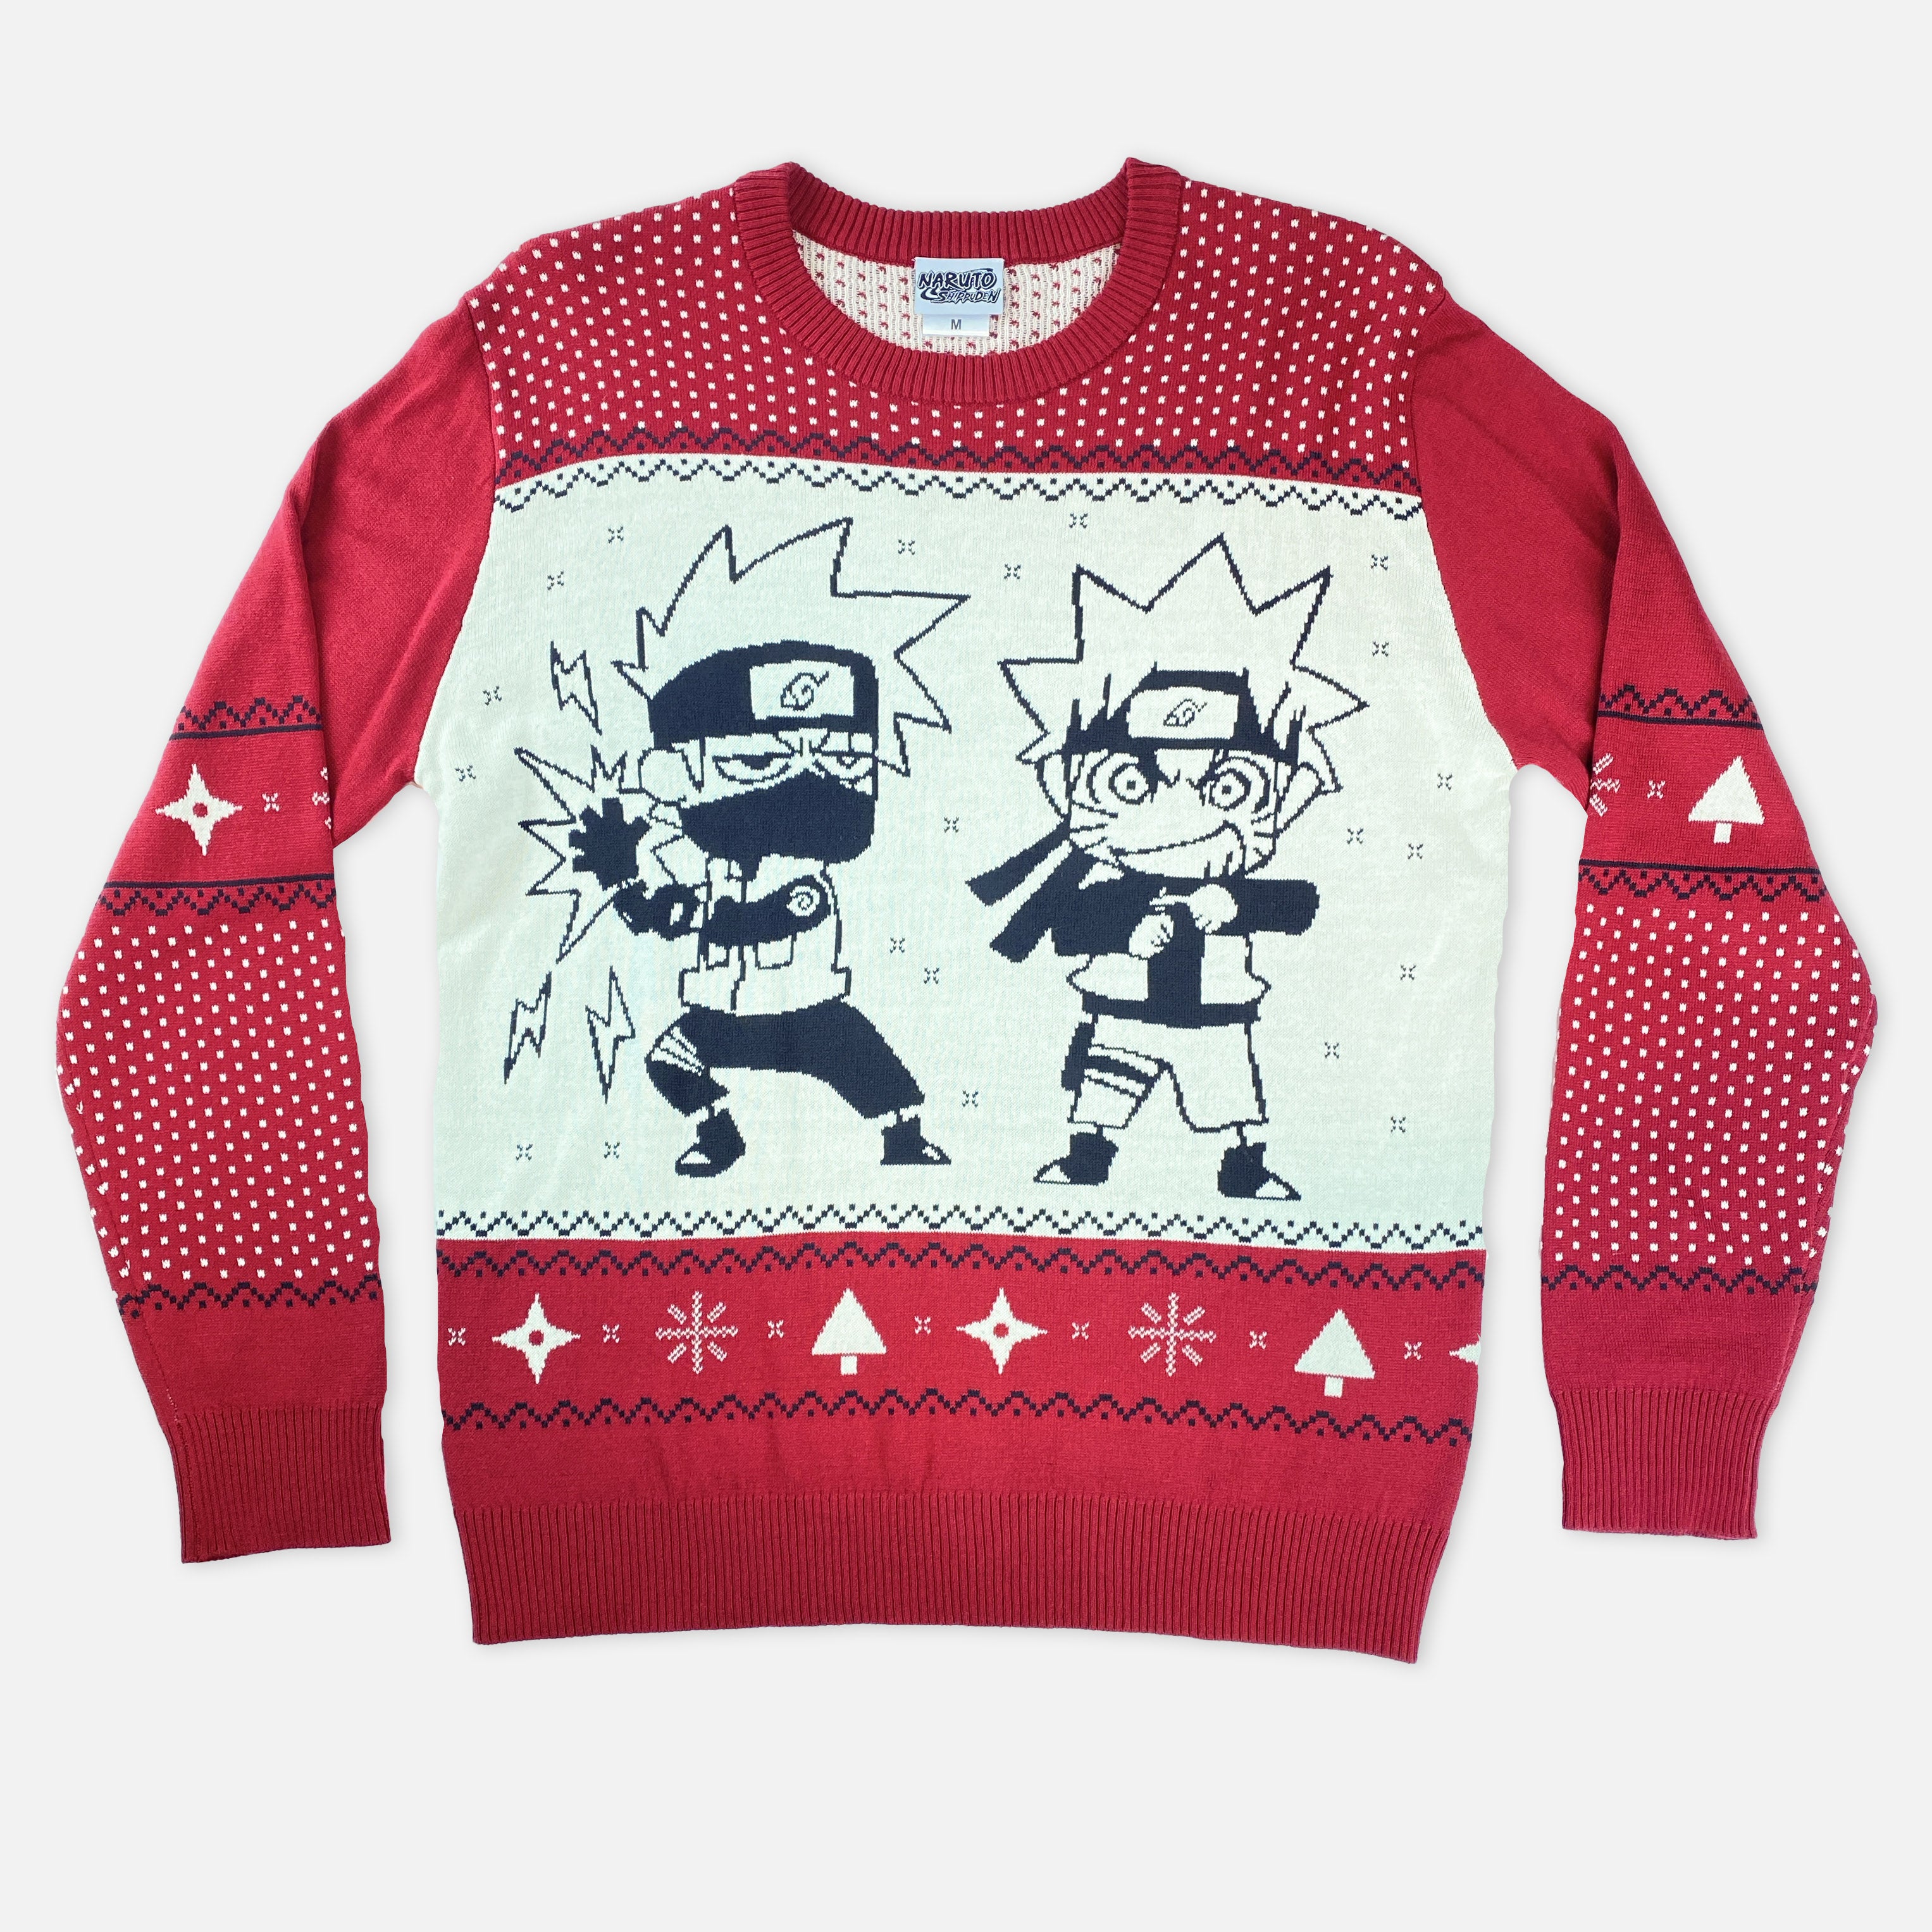 Naruto Shippuden - Naruto Kakashi Chibi Holiday Sweater - Crunchyroll Exclusive! image count 0